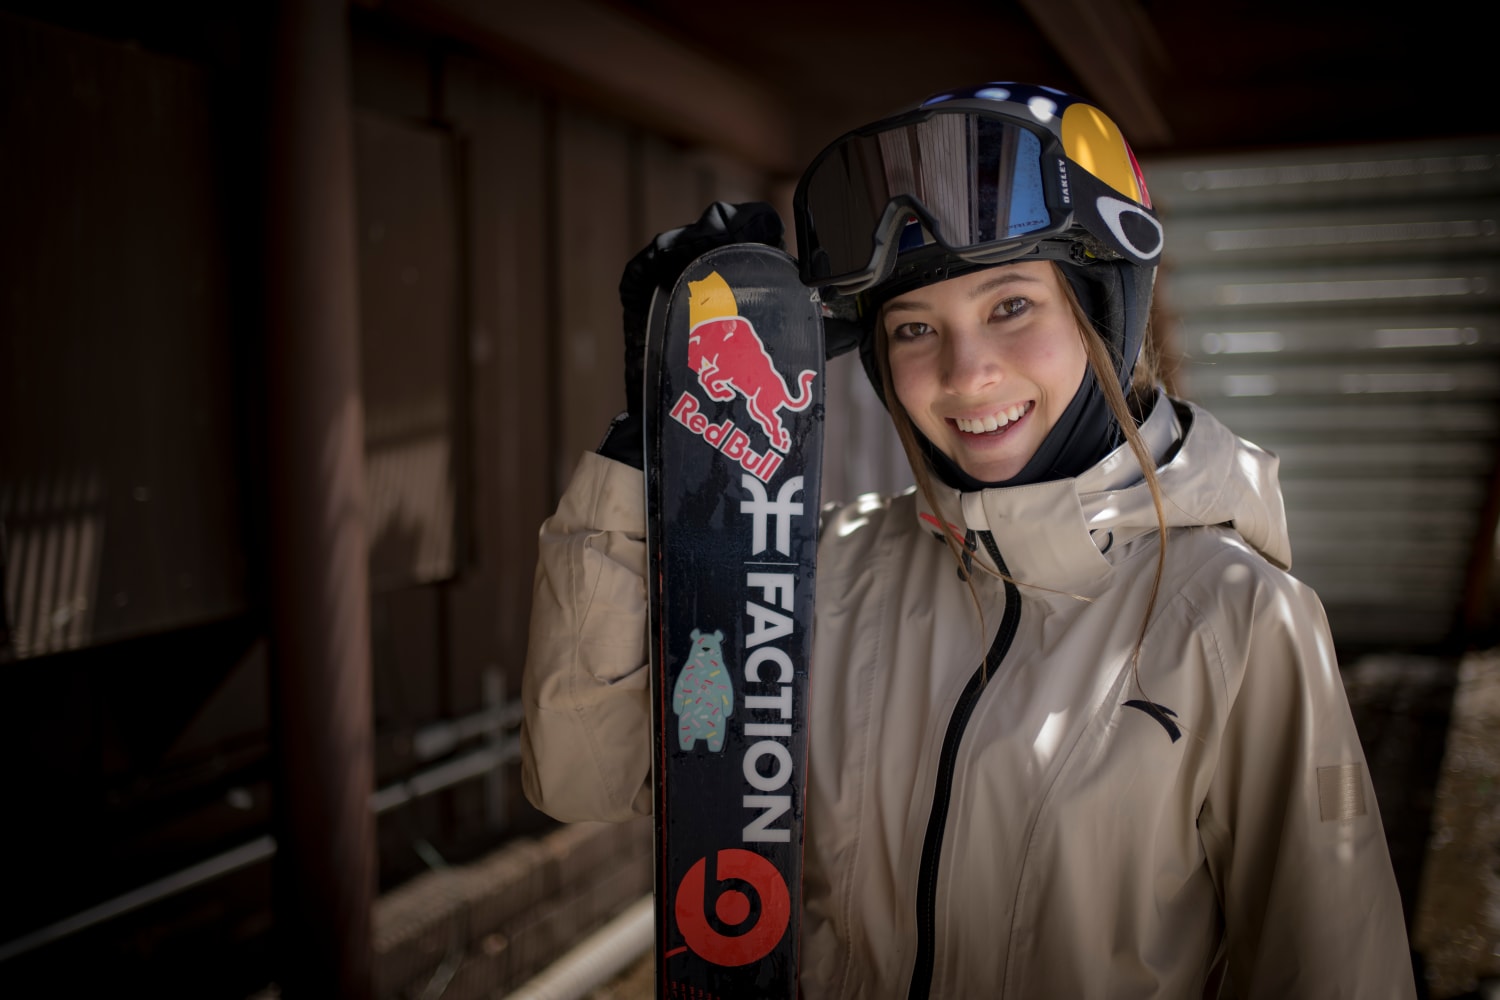 Eileen Gu balances life as X Games skier, model and Stanford freshman